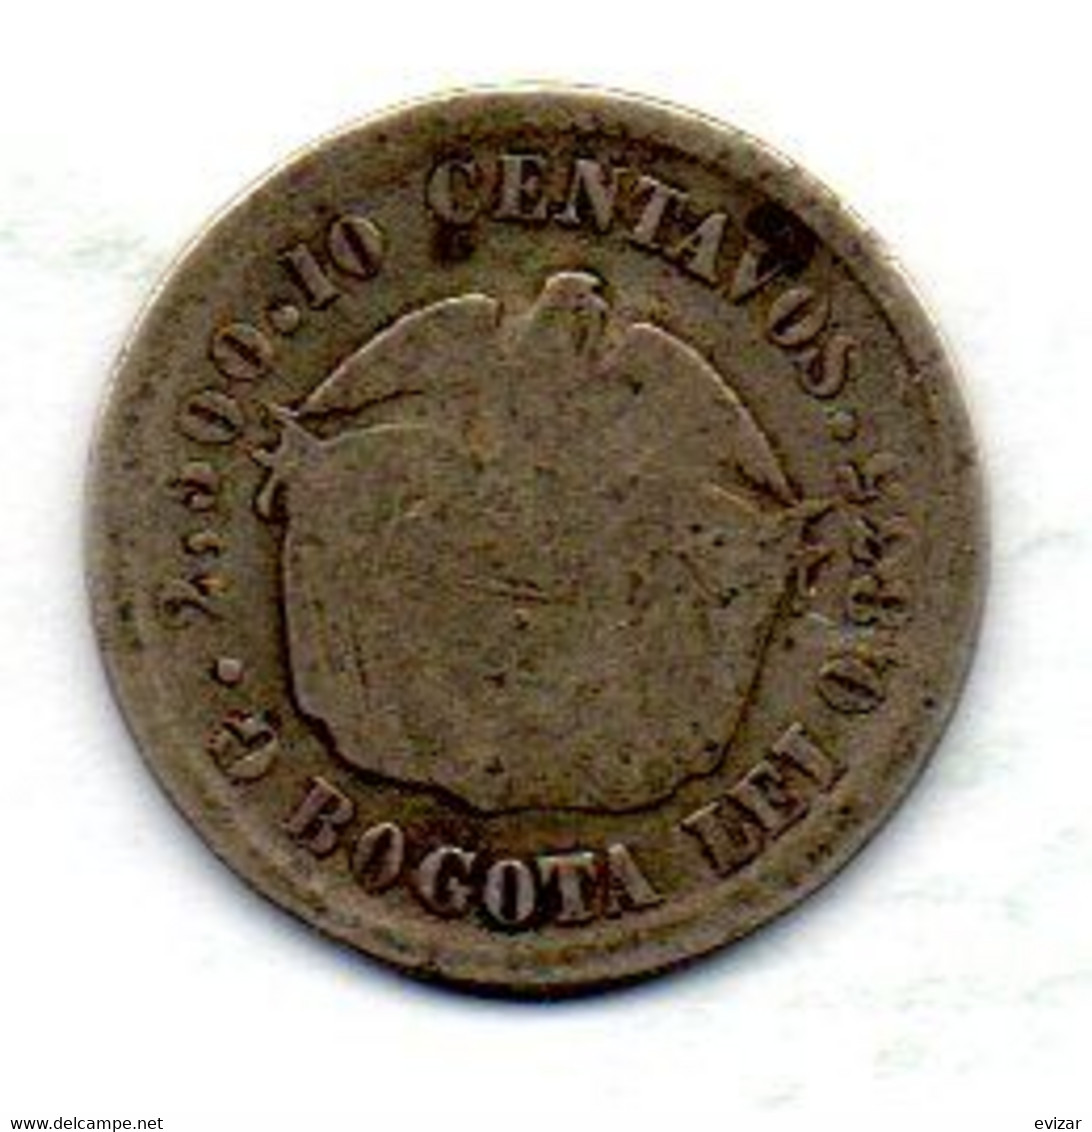 COLOMBIA, 10 Centavos, Silver, Year 1873, KM #171 - Kolumbien